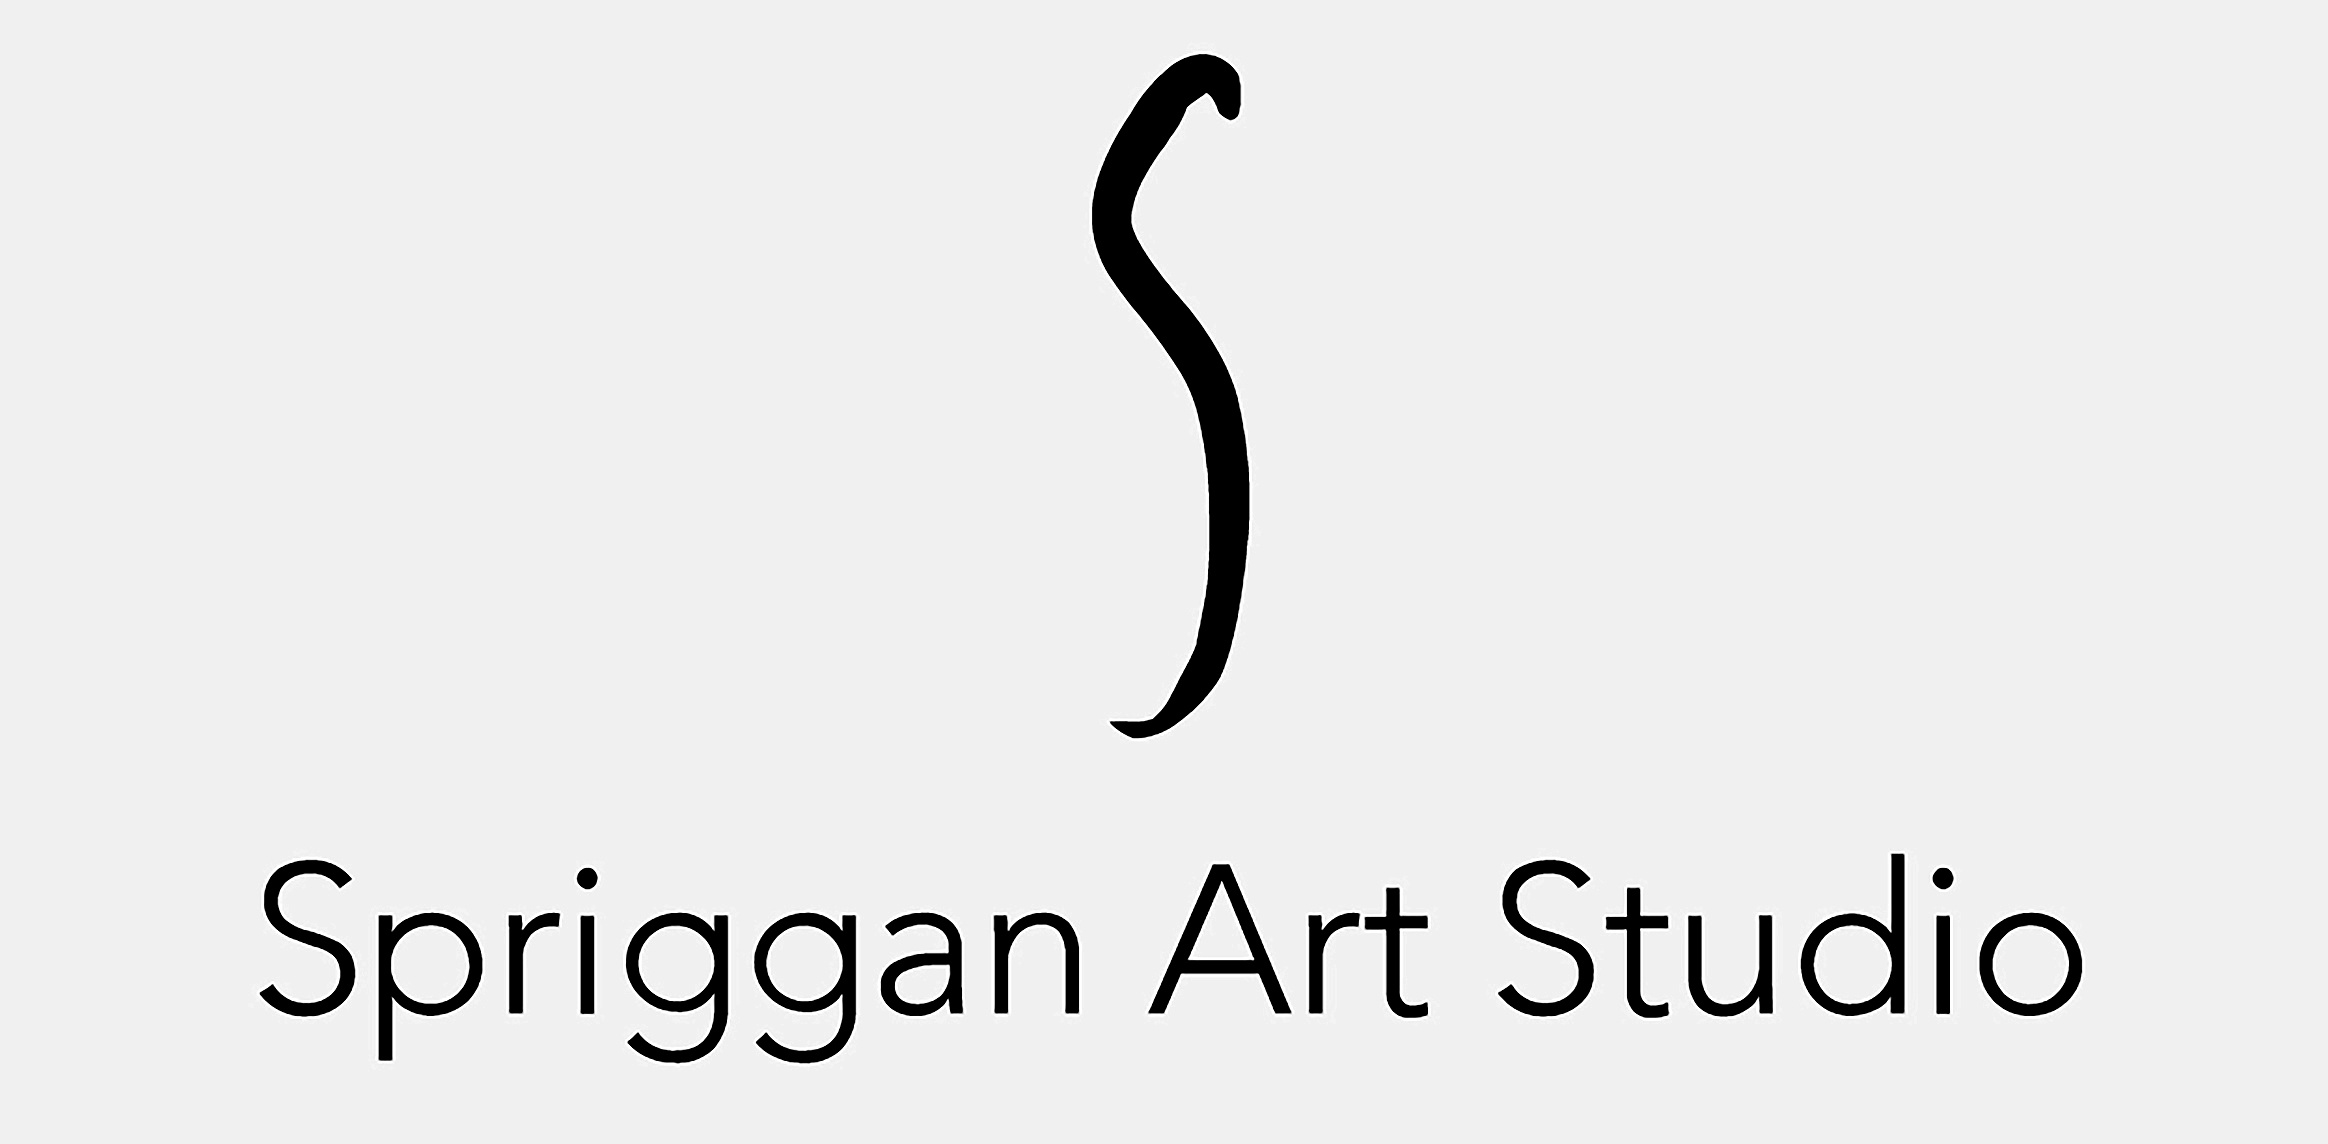 Spriggan Art Studio